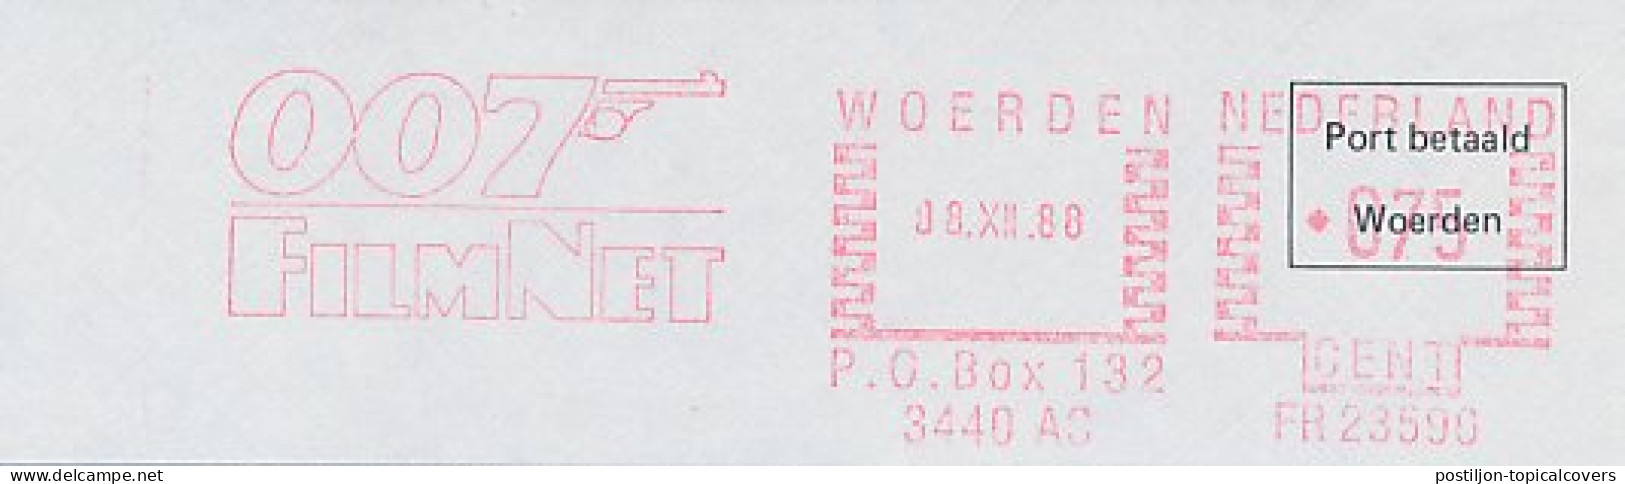 Meter Cut Netherlands 1988 007 - James Bond - Filmnet - Movie - Kino